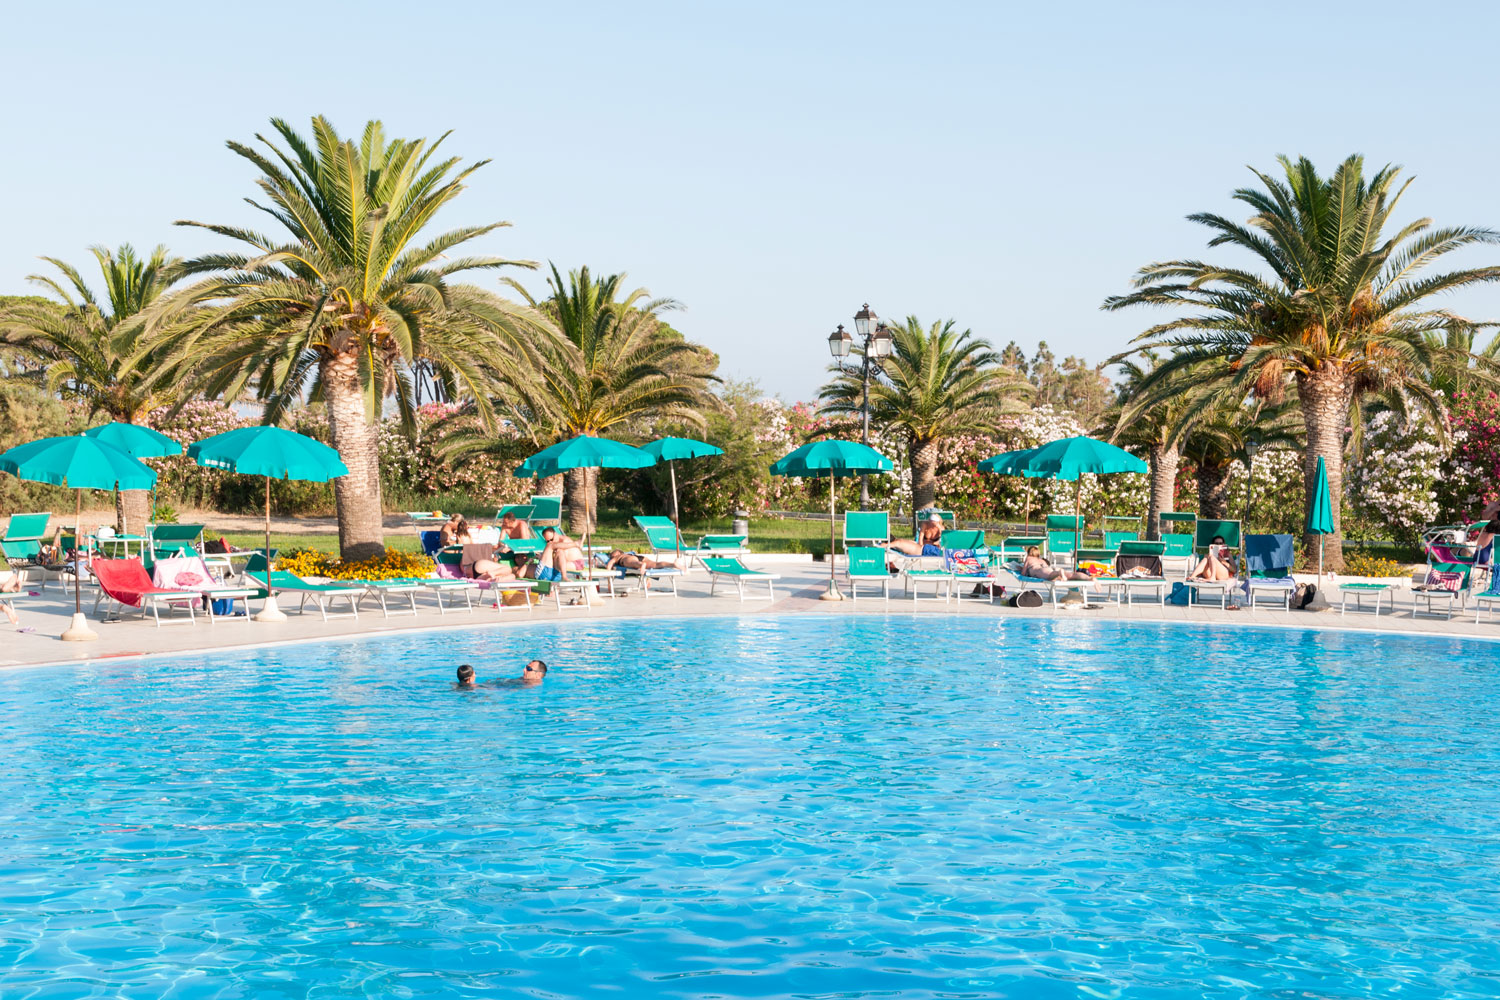 La piscina immersa nel verde al Resort Marina Garden & Beach in Sardegna